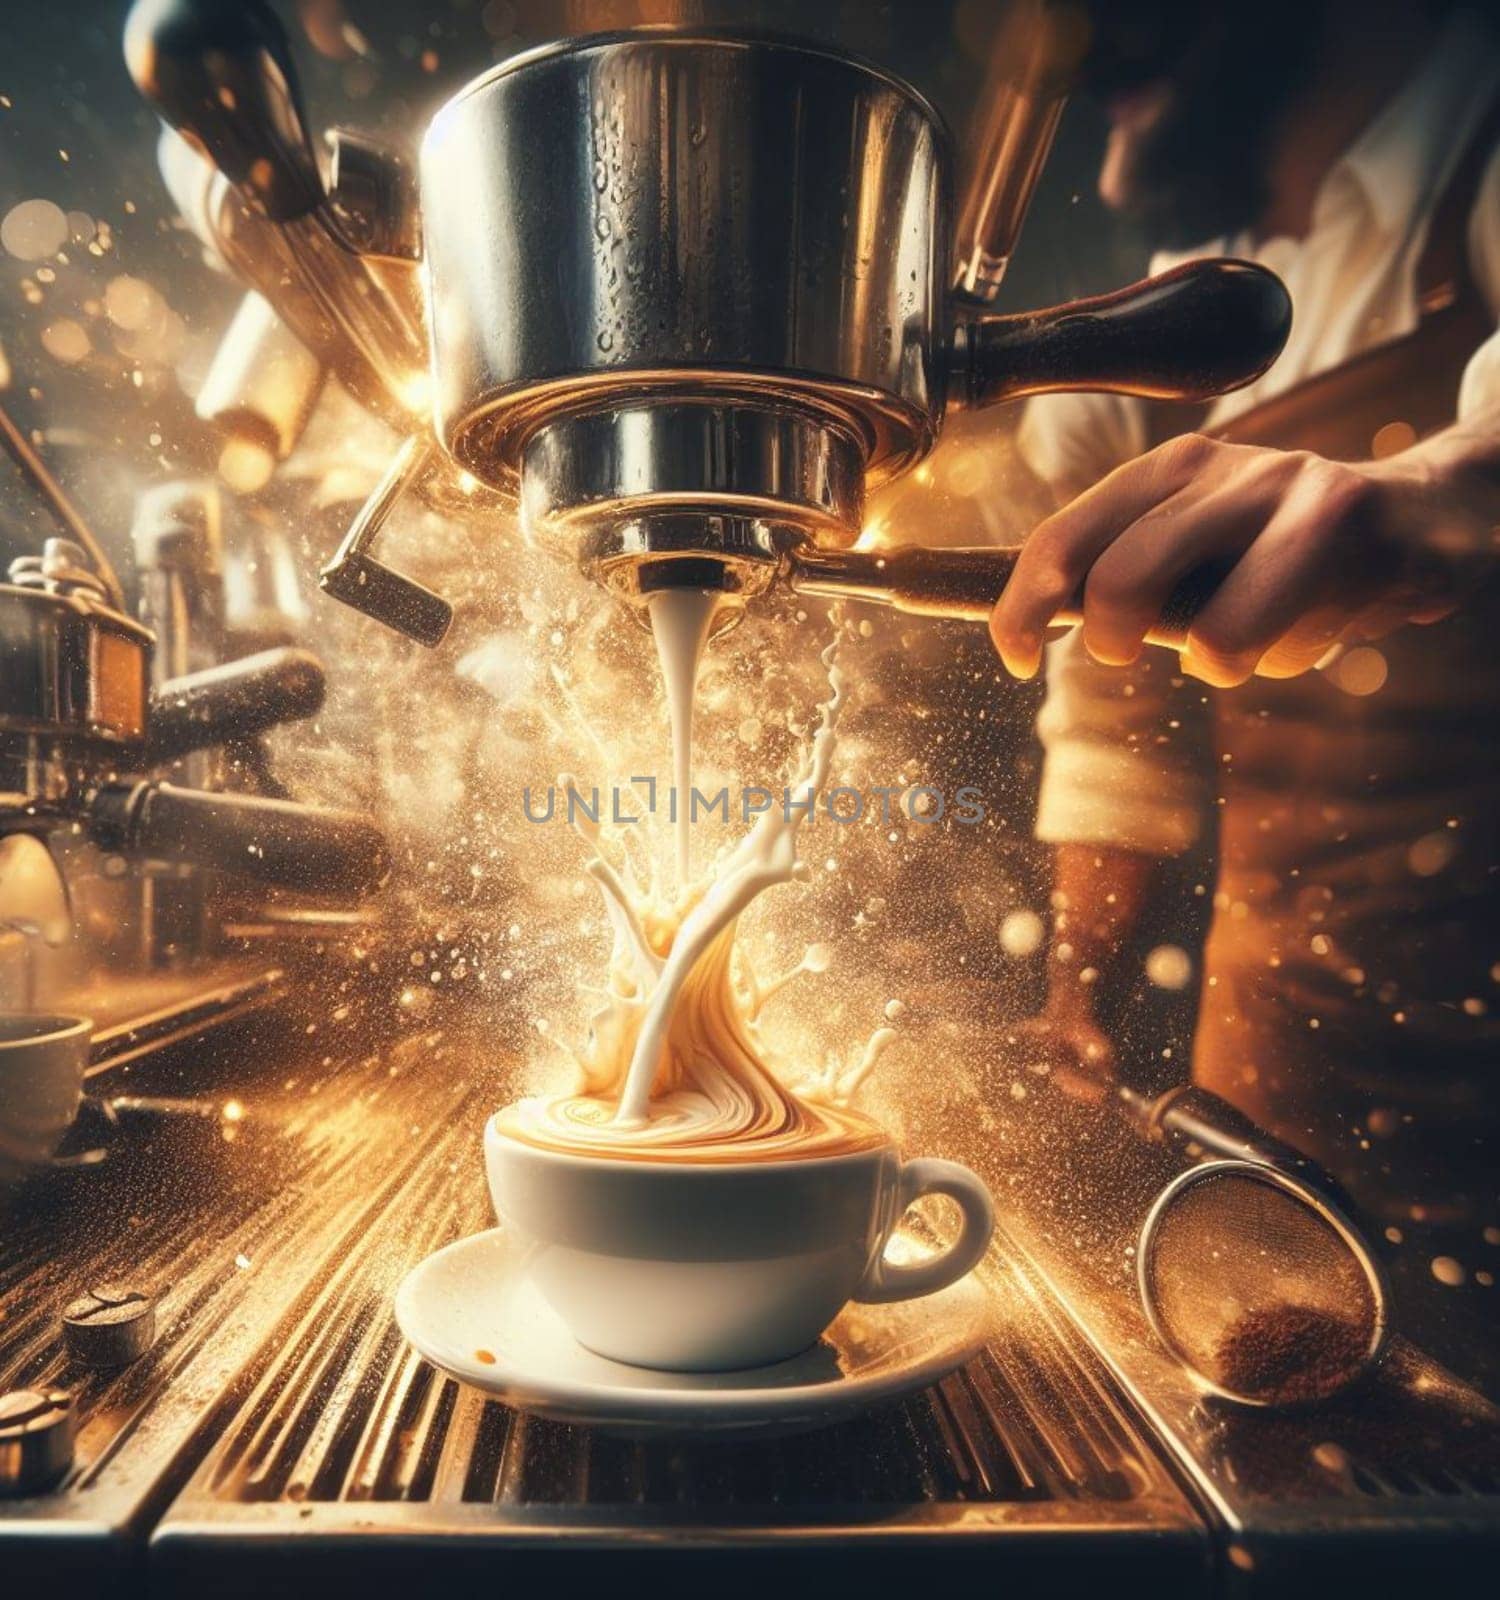 make latte art golden cappuccino at bar expert barista splashing cream fantasy illustration render by verbano